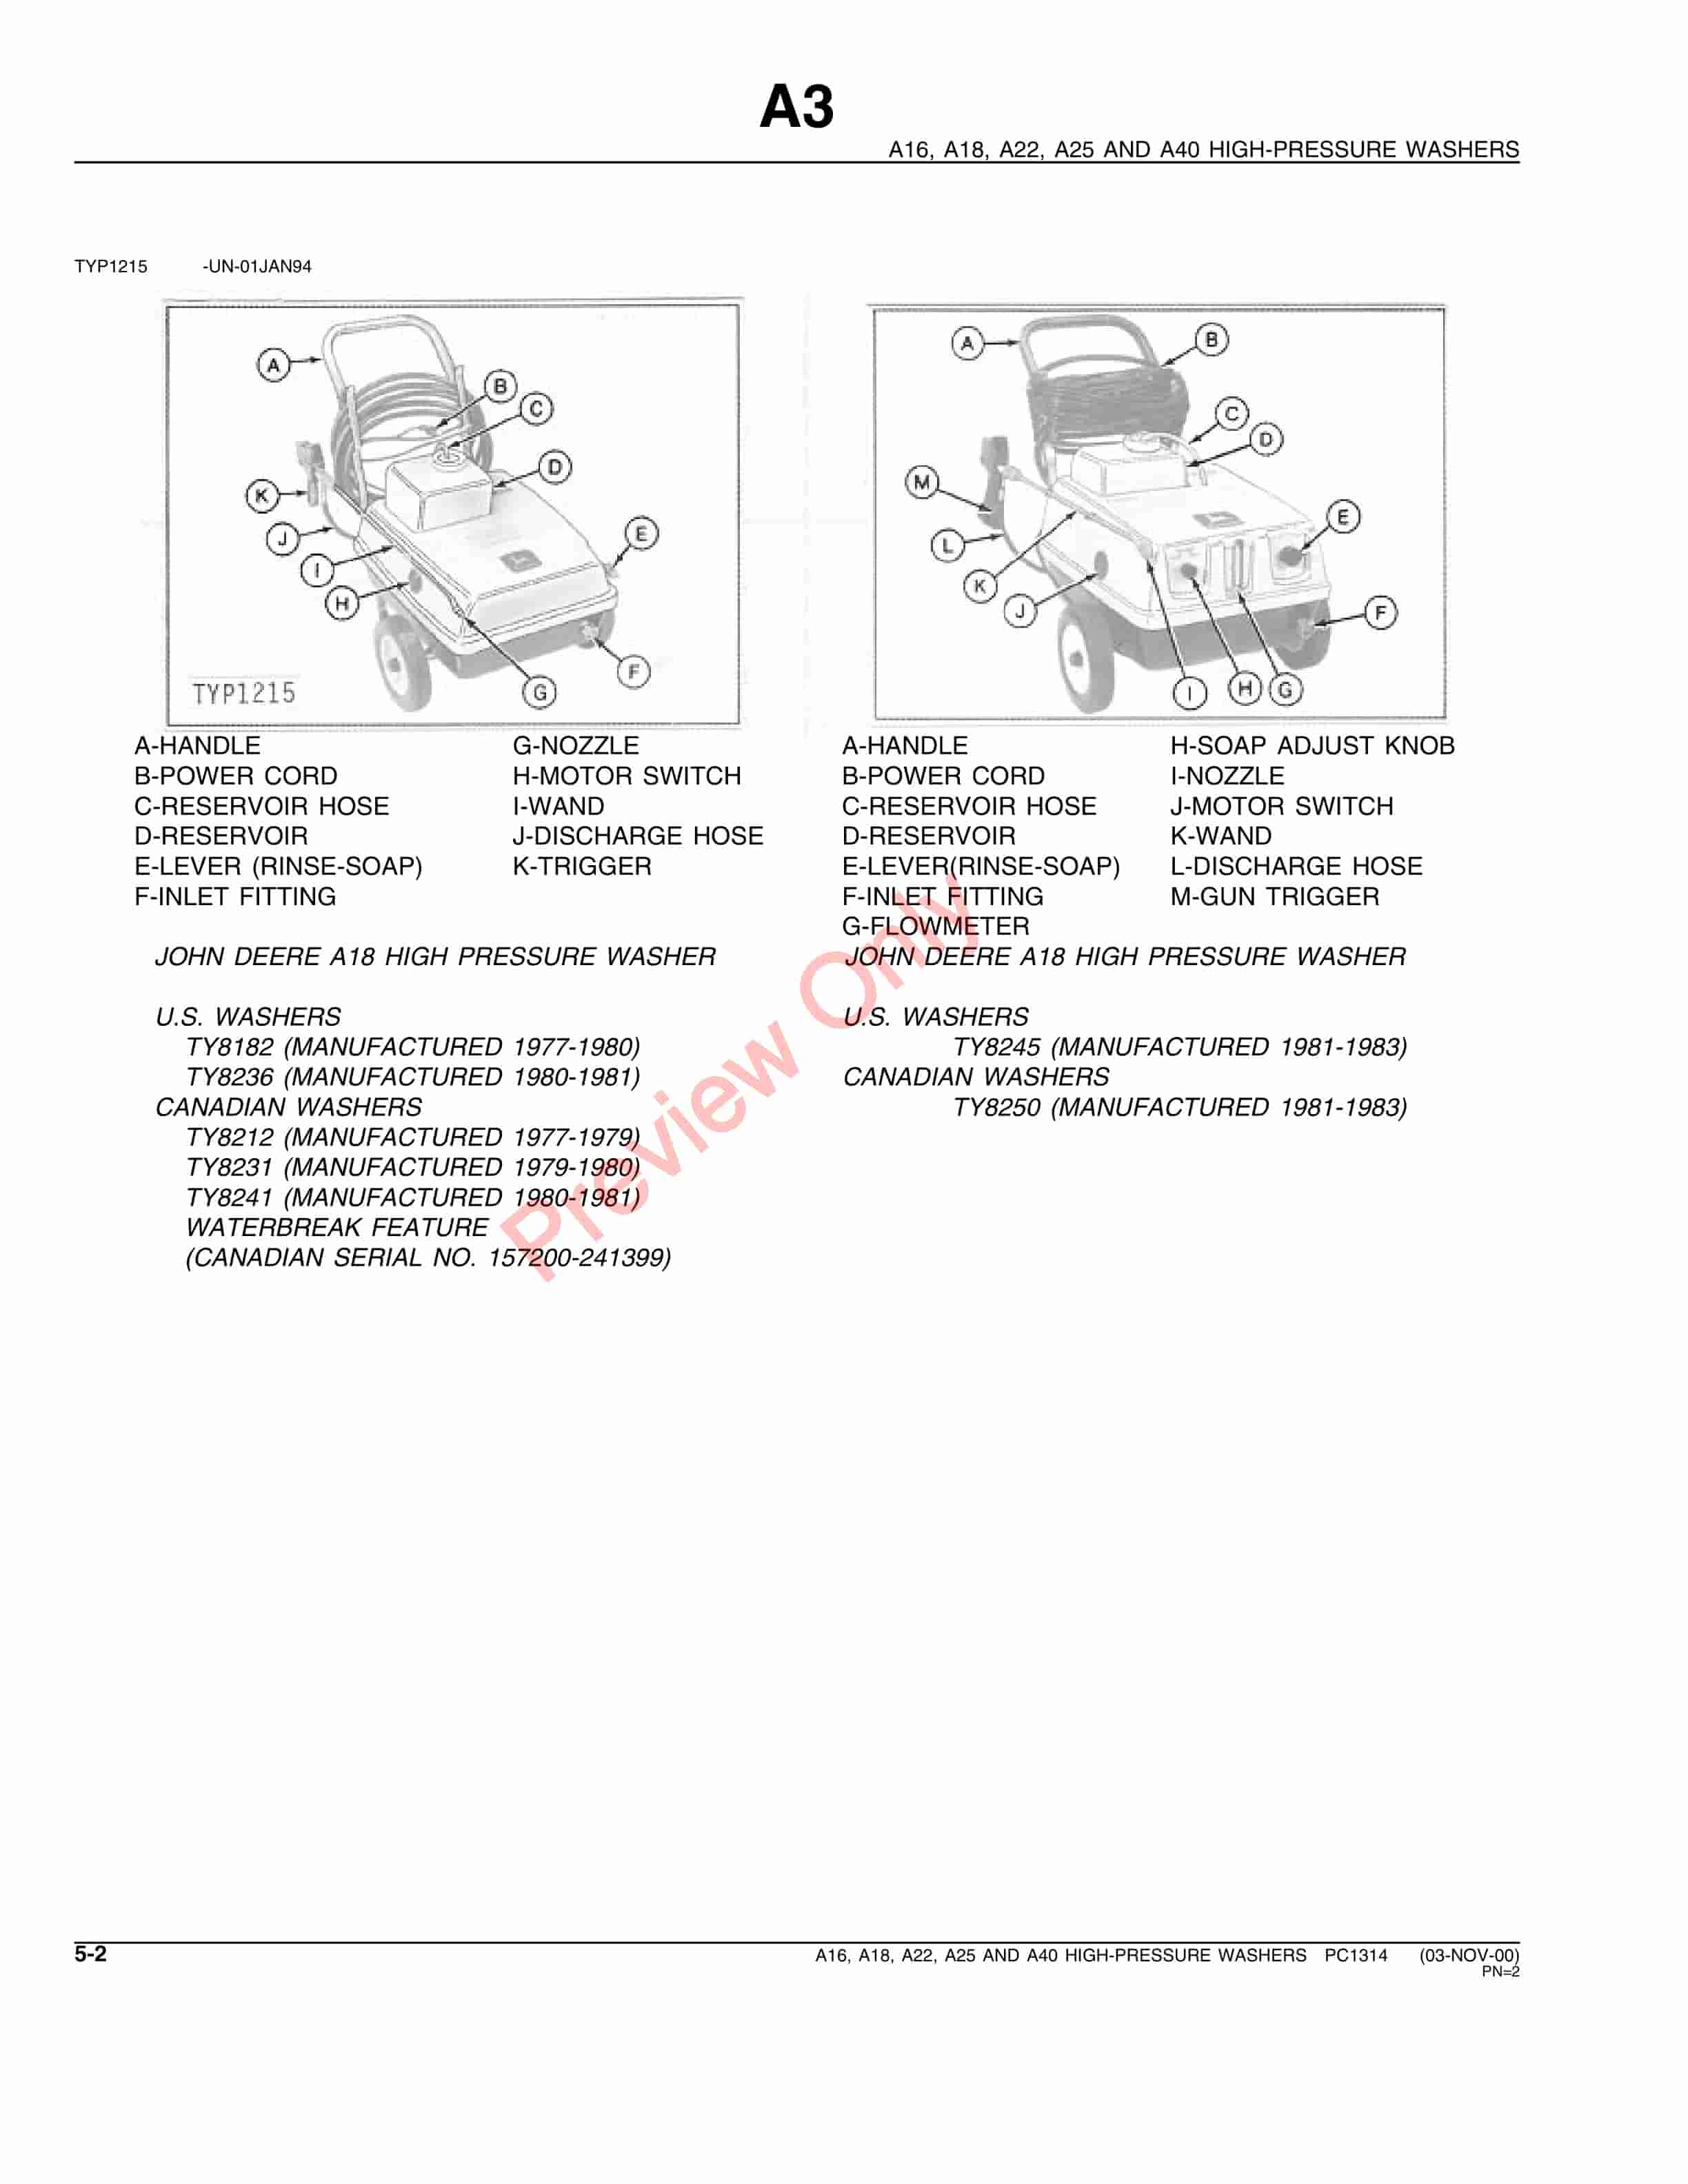 John Deere A16, A18, A22, A25, A40 High-Pressure Washers Parts Catalog PC1314 03NOV00-4